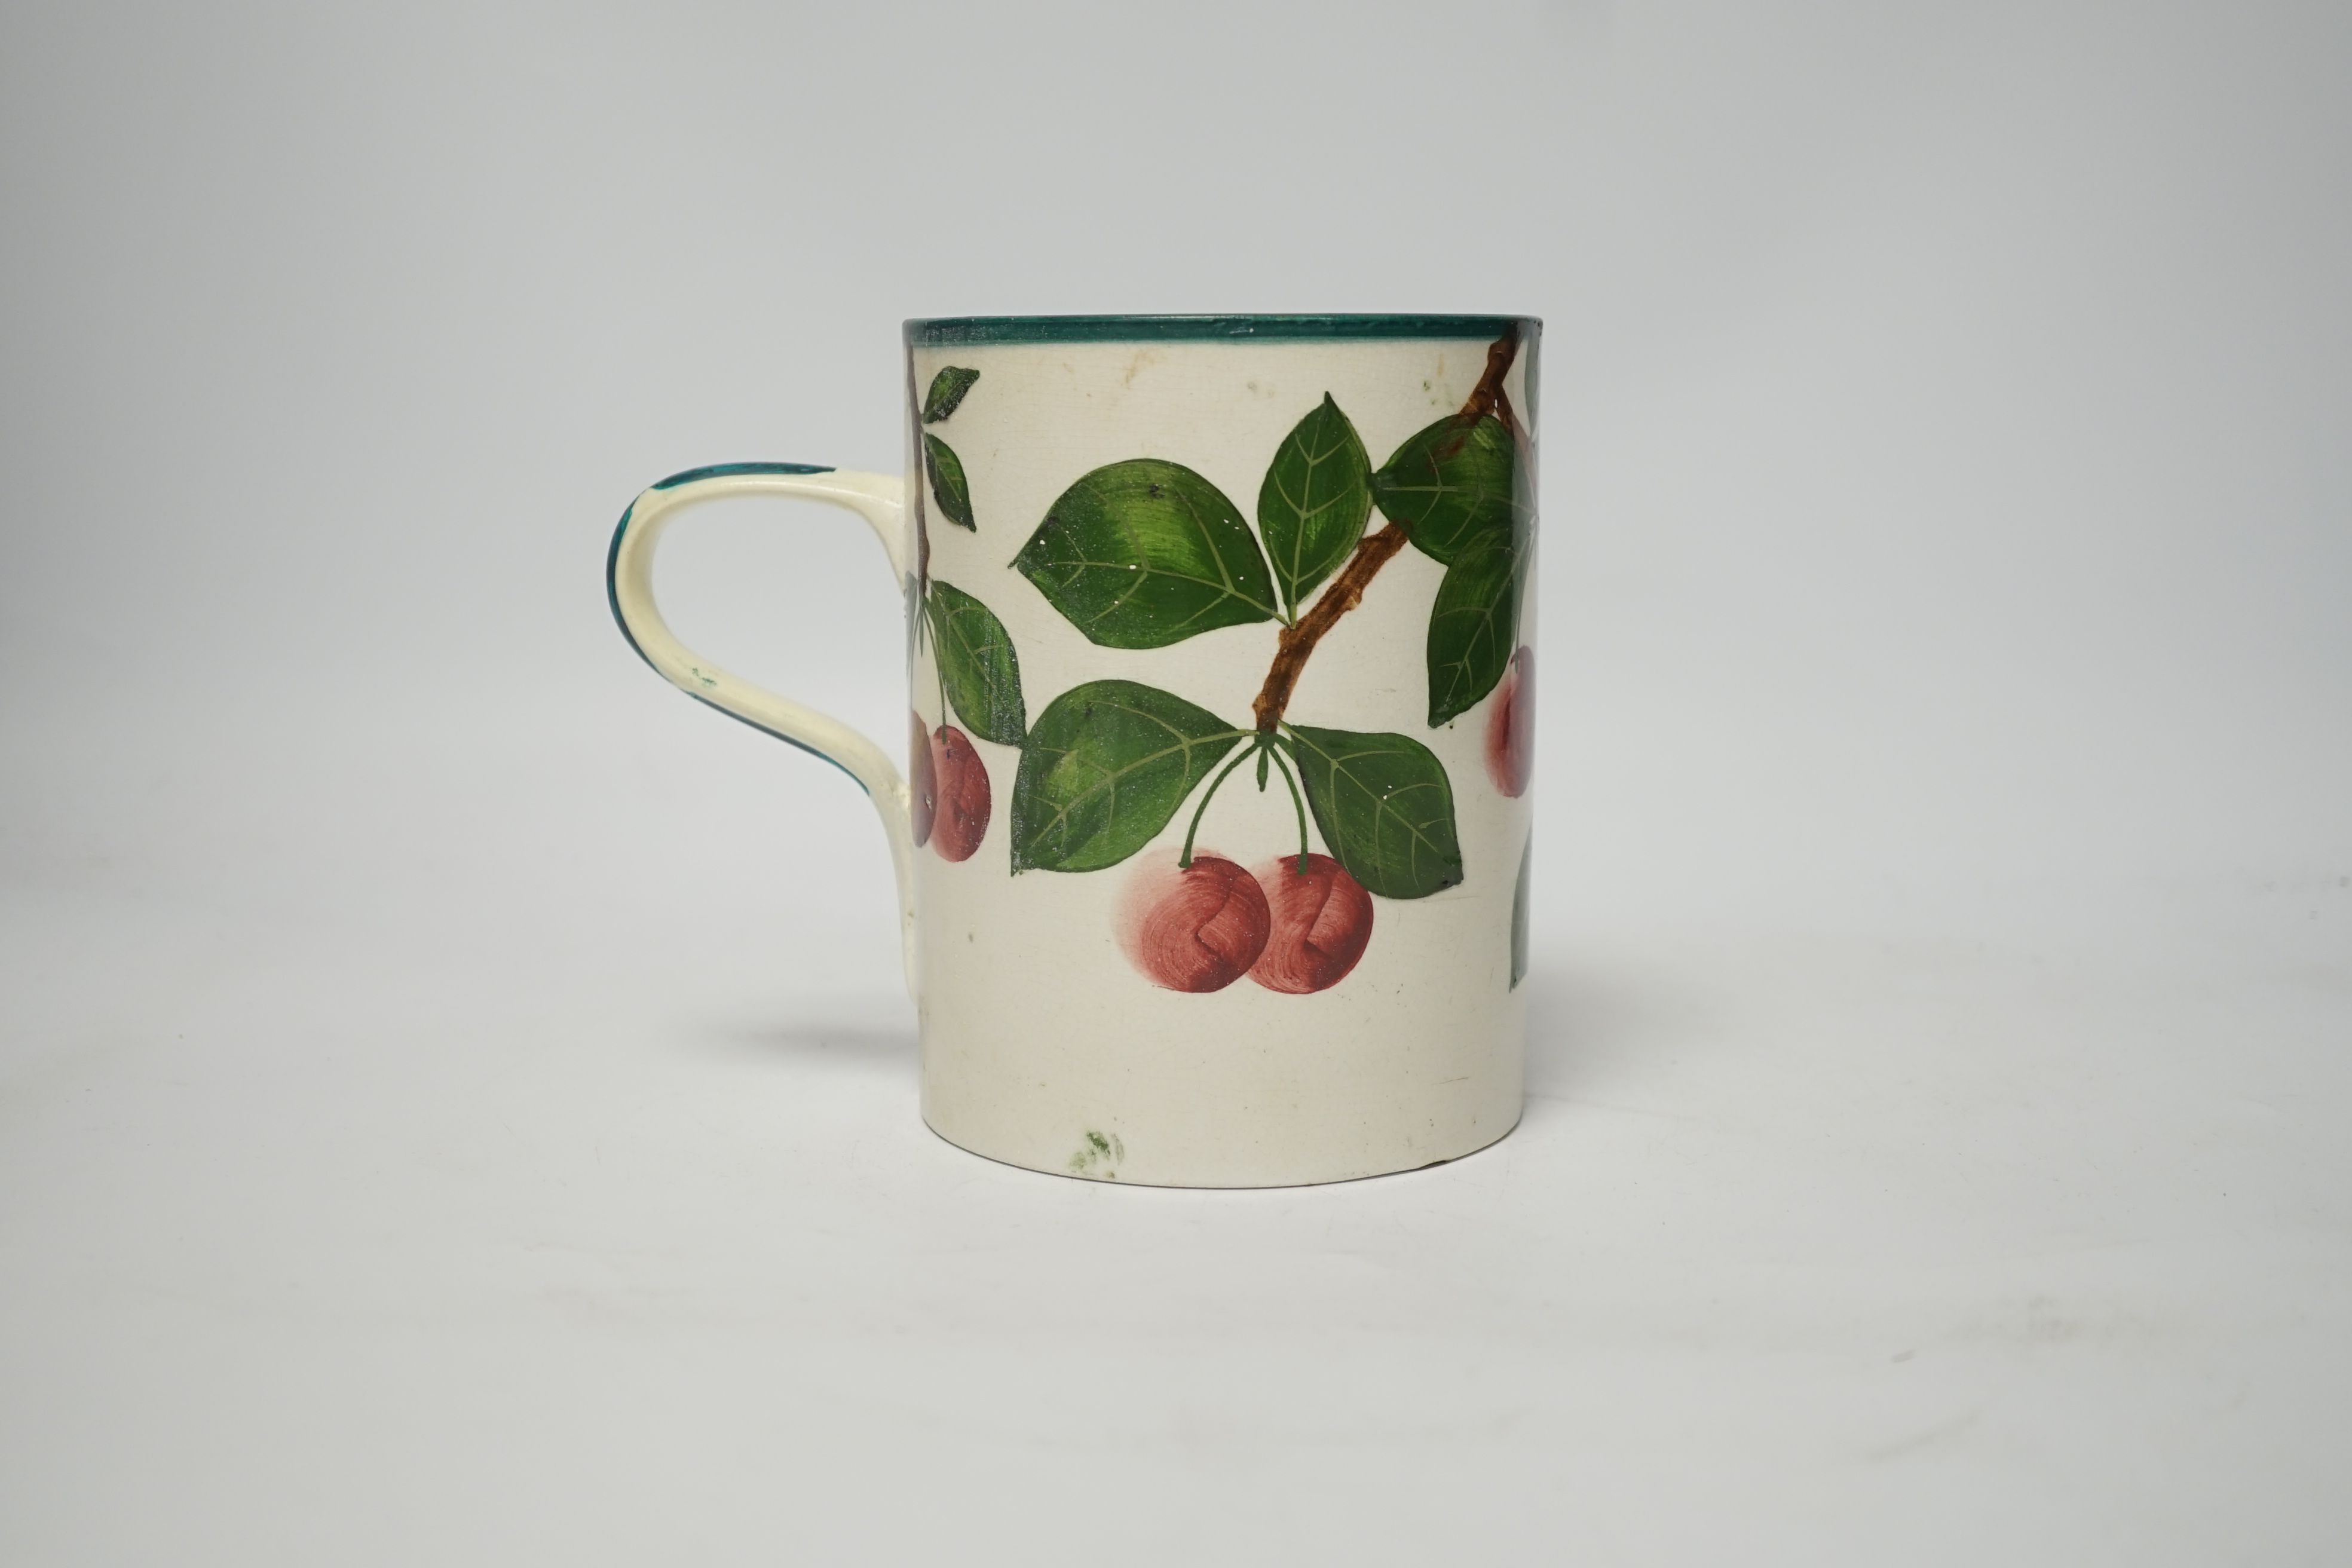 A Wemyss mug with cherry decoration (restored a.f.), 14cm high